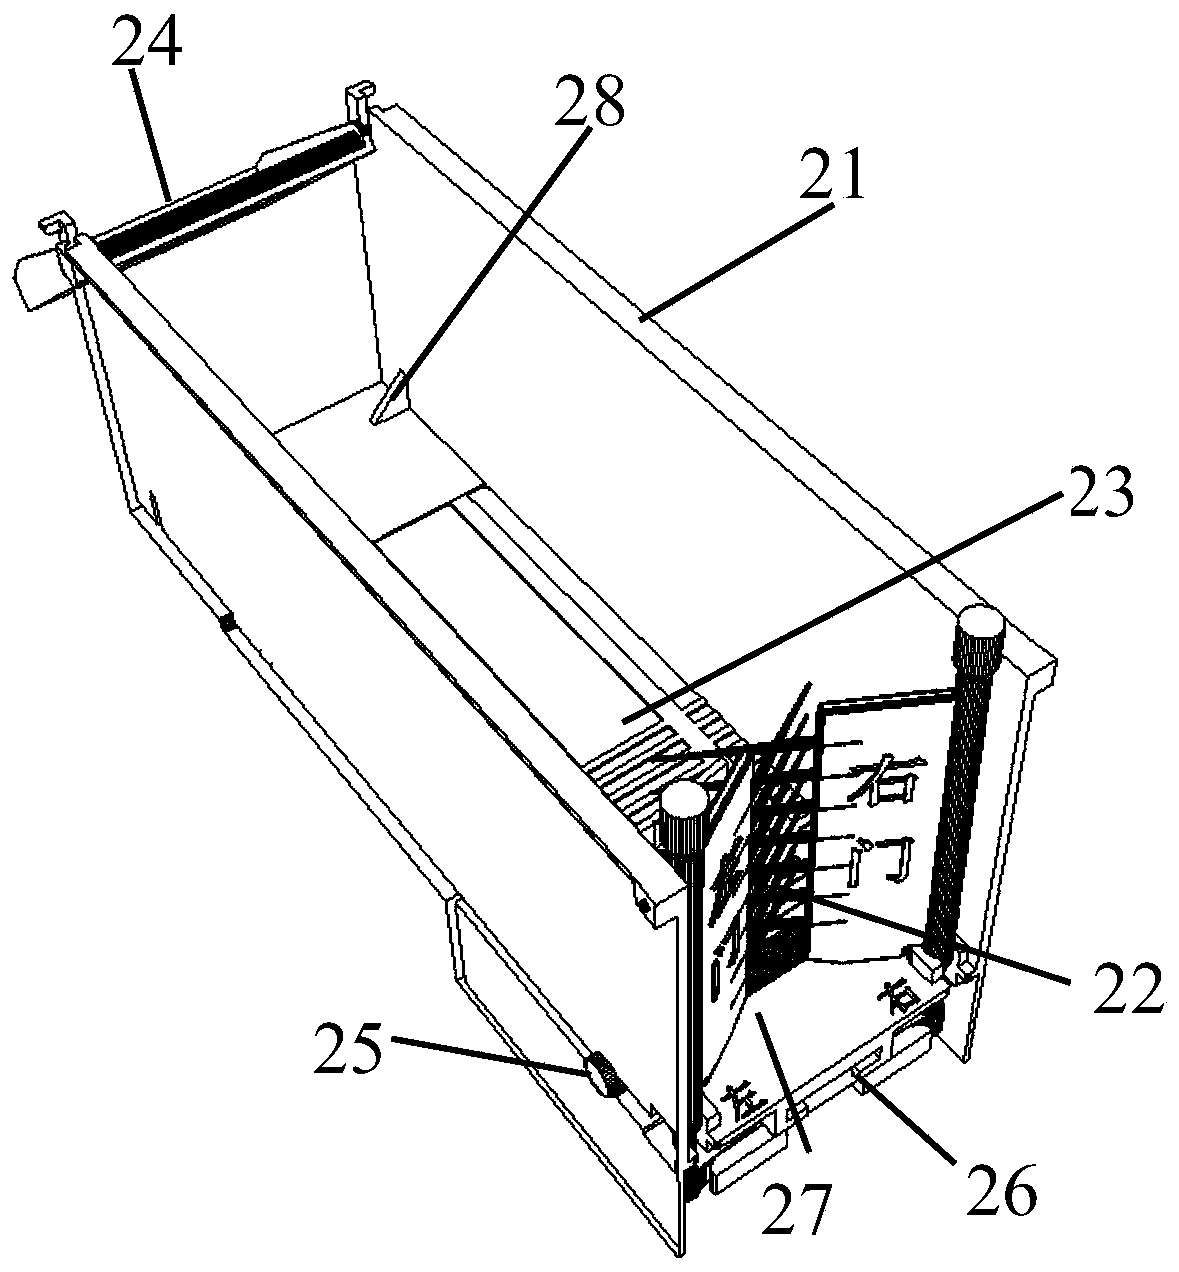 Needle door type mousetrap cage